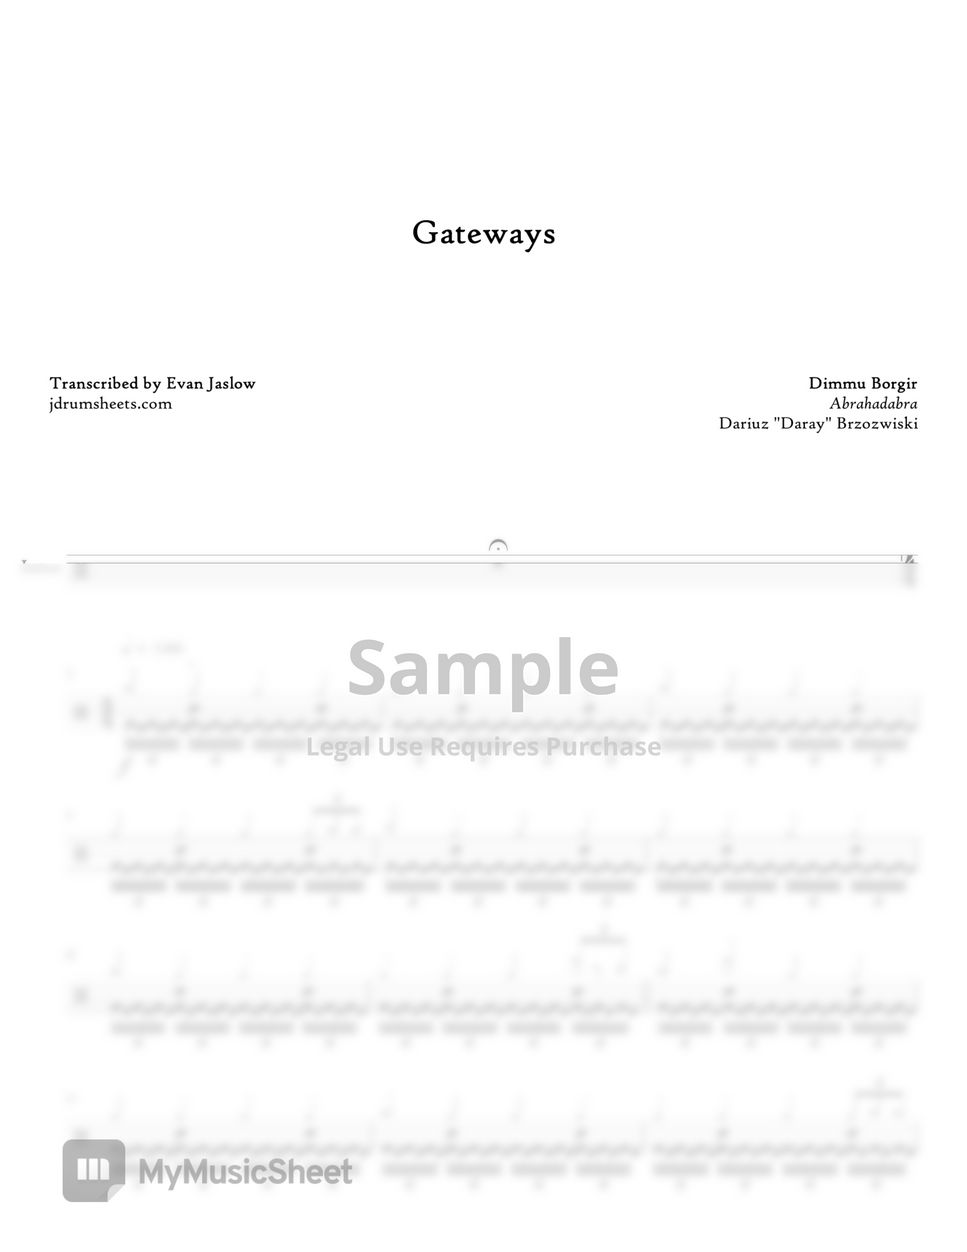 Dimmu Borgir - Gateways by Evan Jaslow